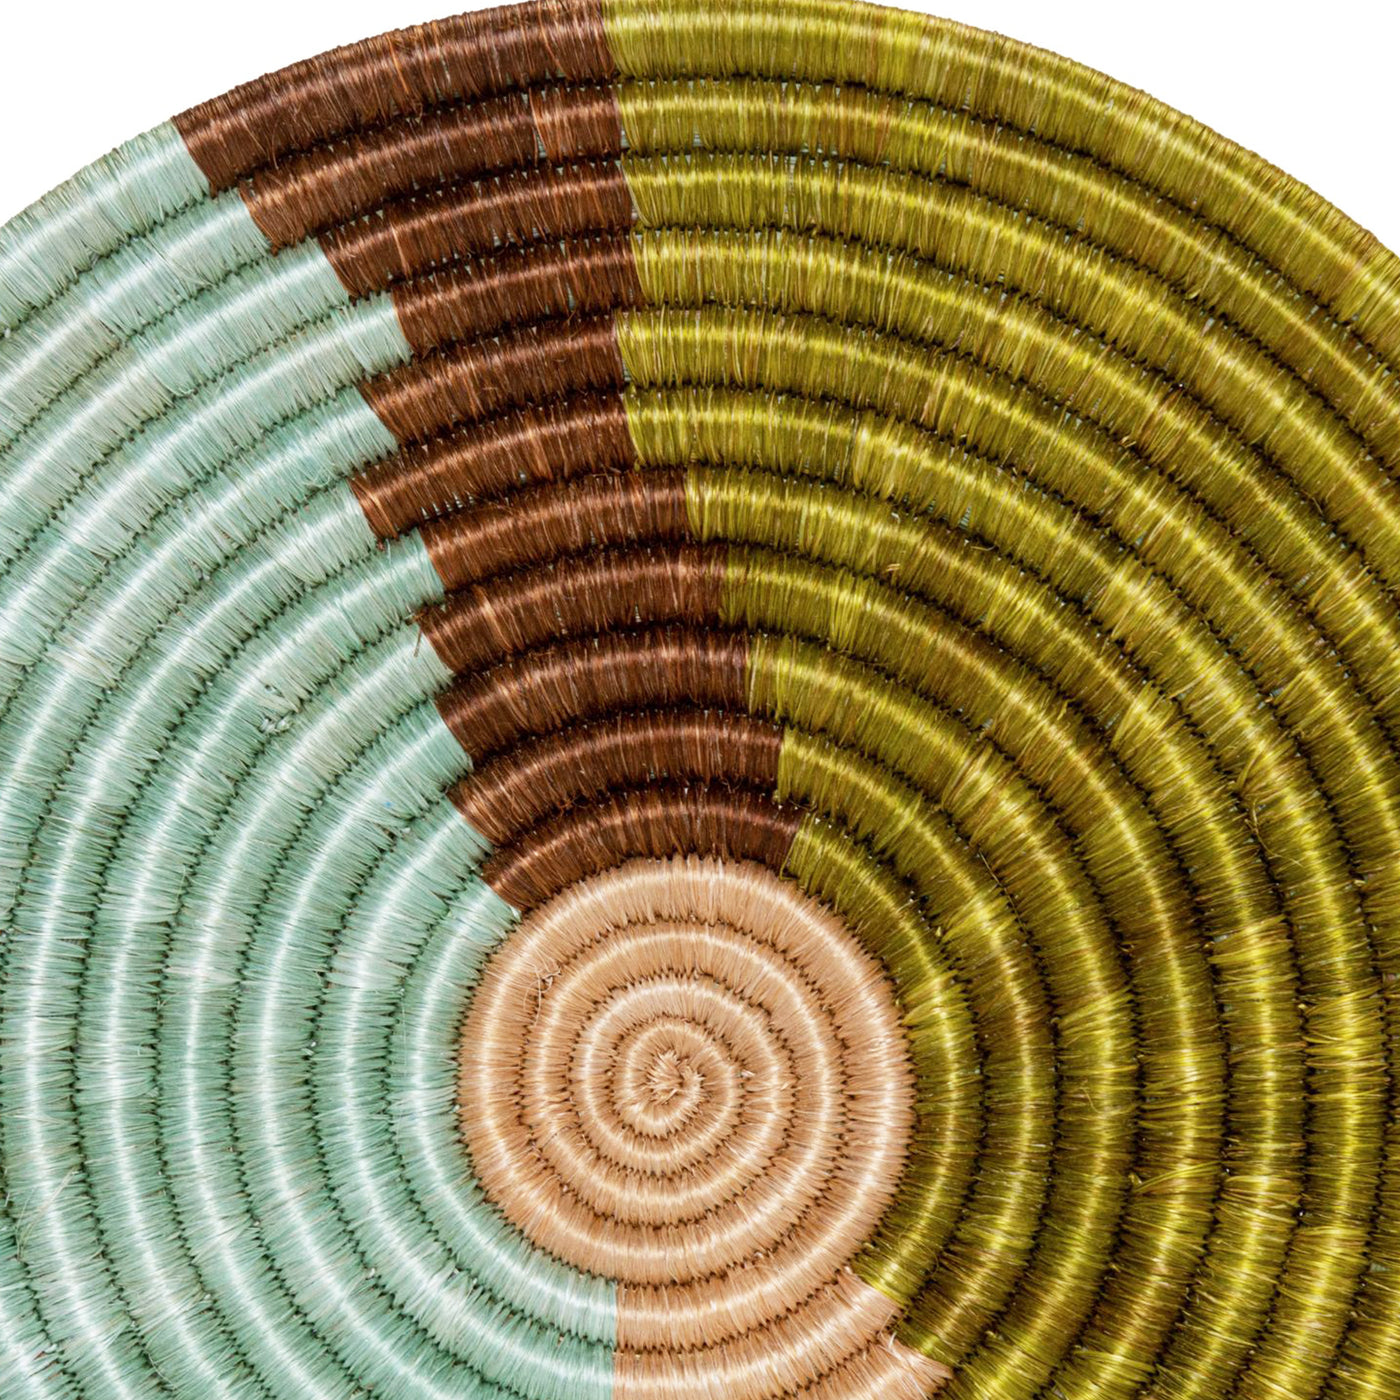 Restorative Table Plate - 10" Tierra Striped